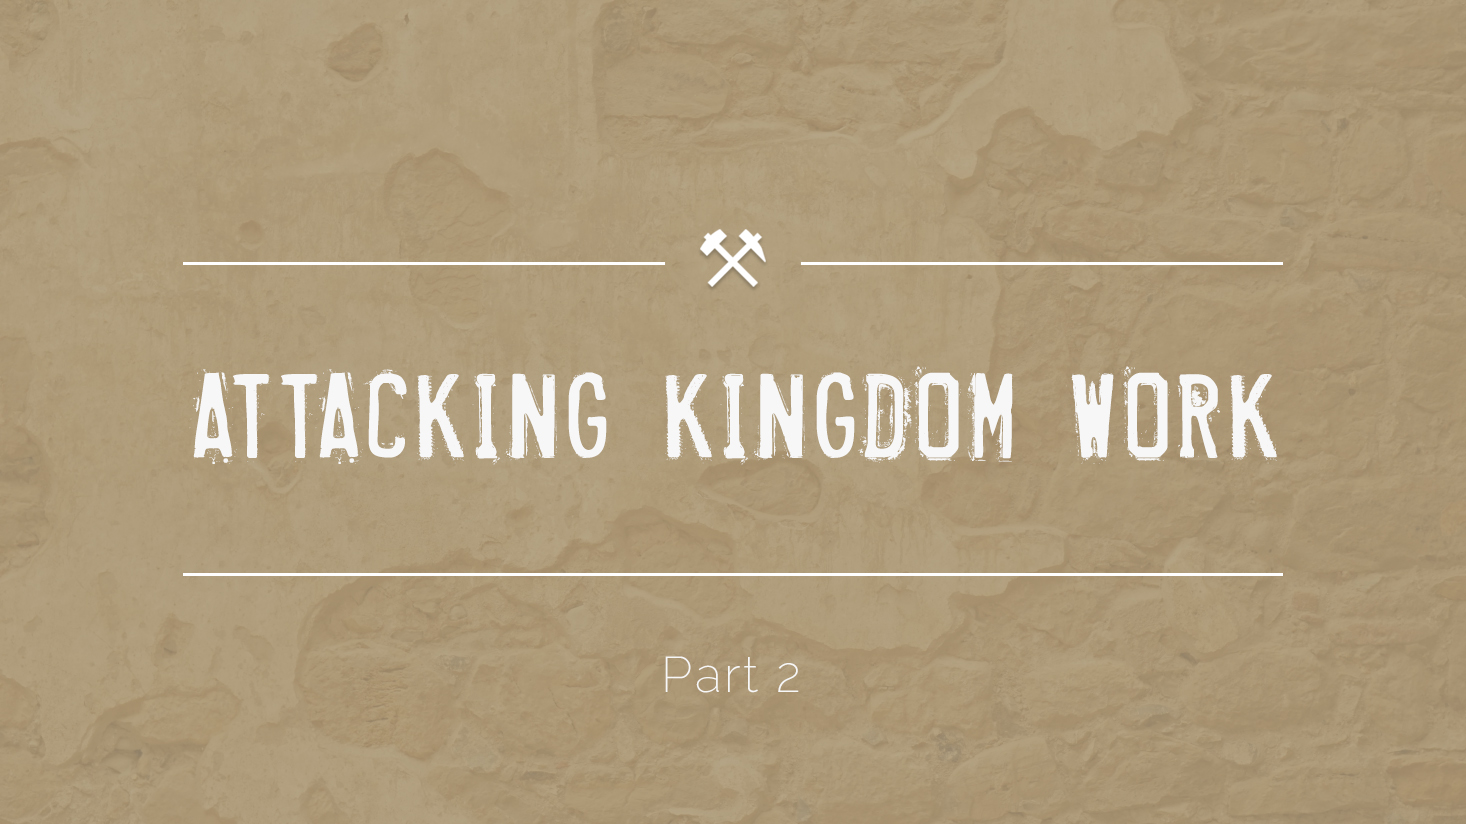 Attacking Kingdom Work: Handling Criticism